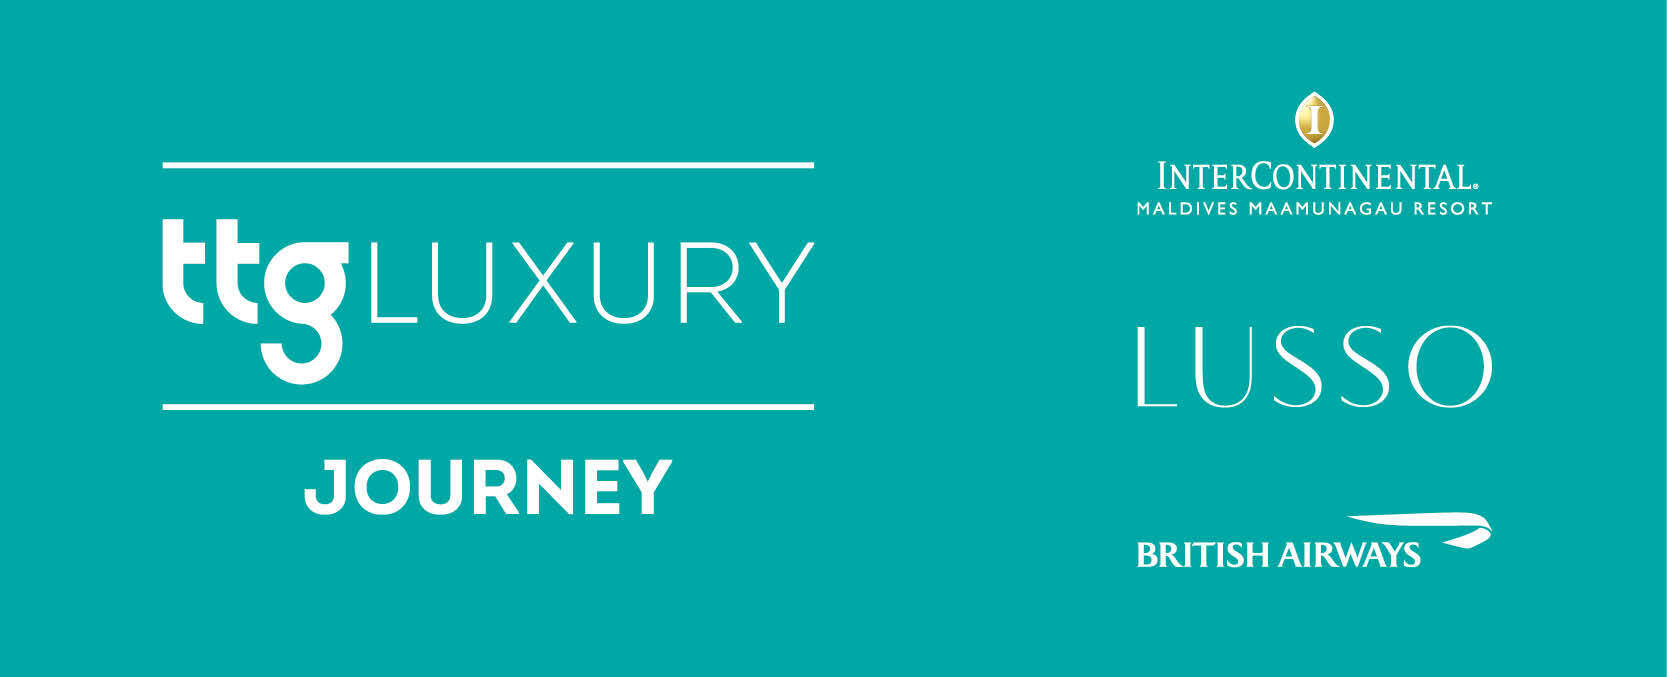 Intercontinental TTG Luxury Journey